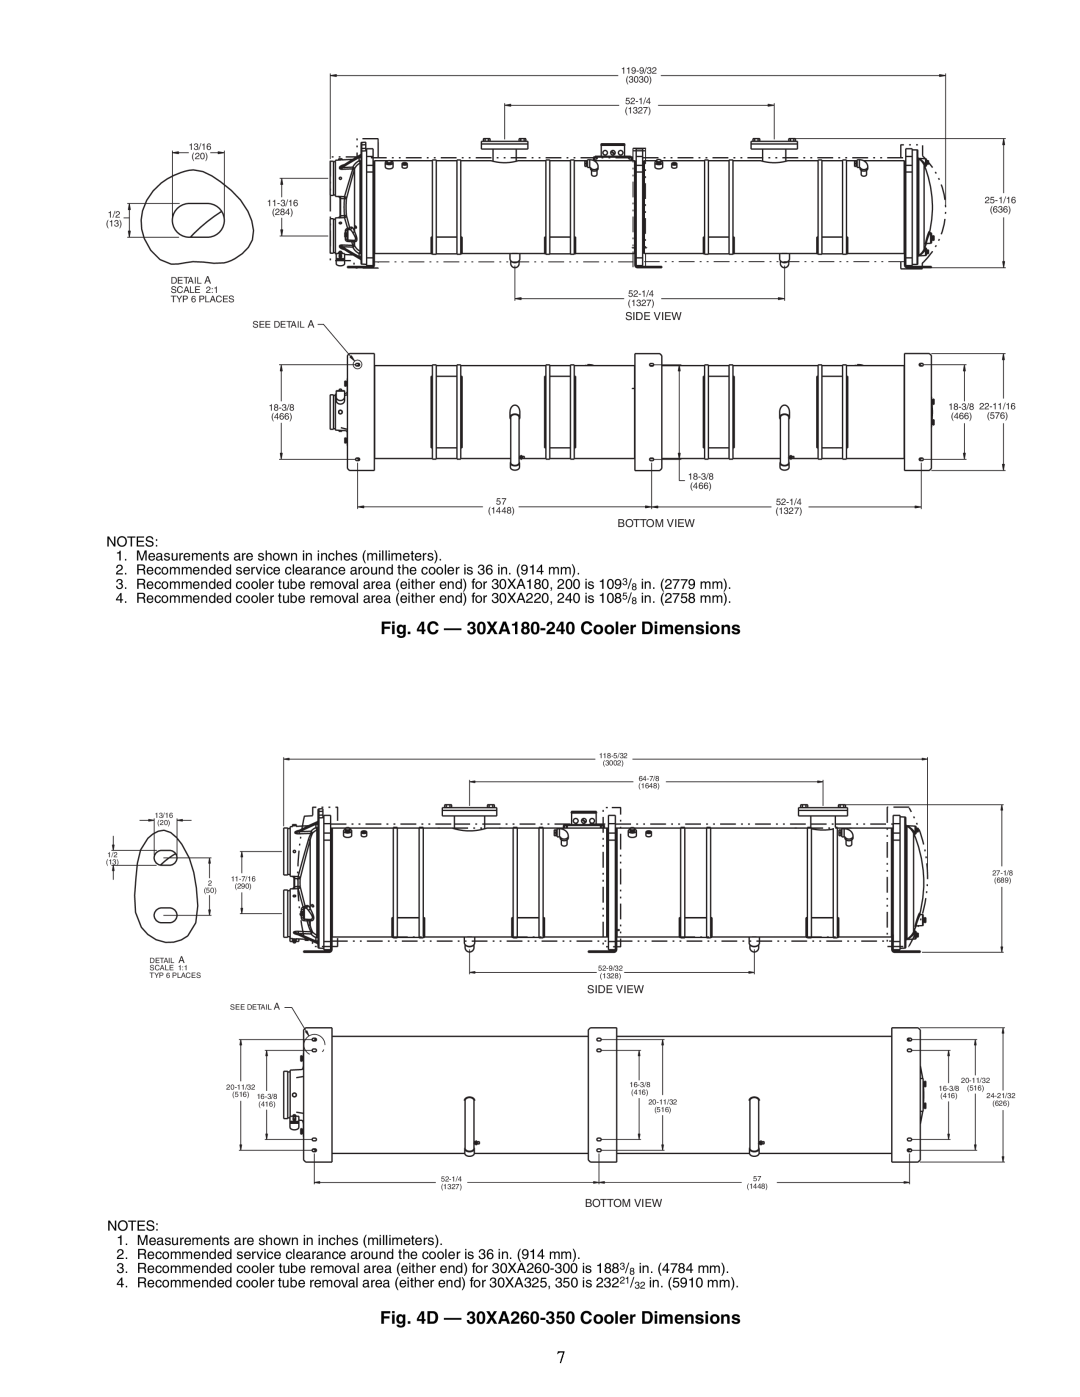 Carrier 00EFN900003000A C - 30XA180-240 Cooler Dimensions, D - 30XA260-350 Cooler Dimensions, TYP 6 PLACES 